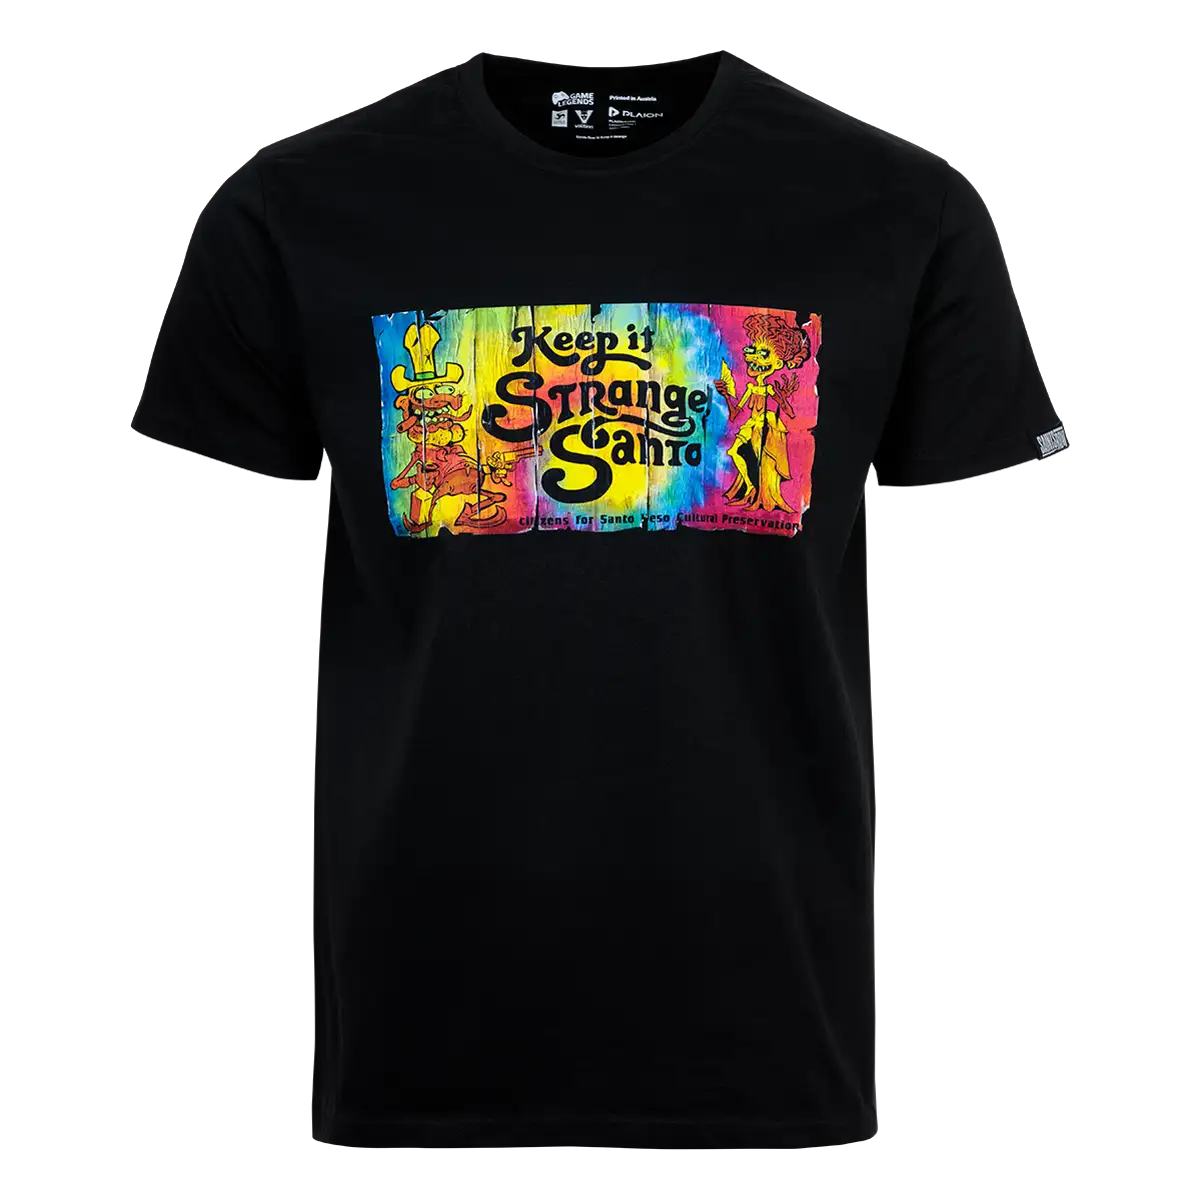 Saints Row T-Shirt "Keep it strange" Black